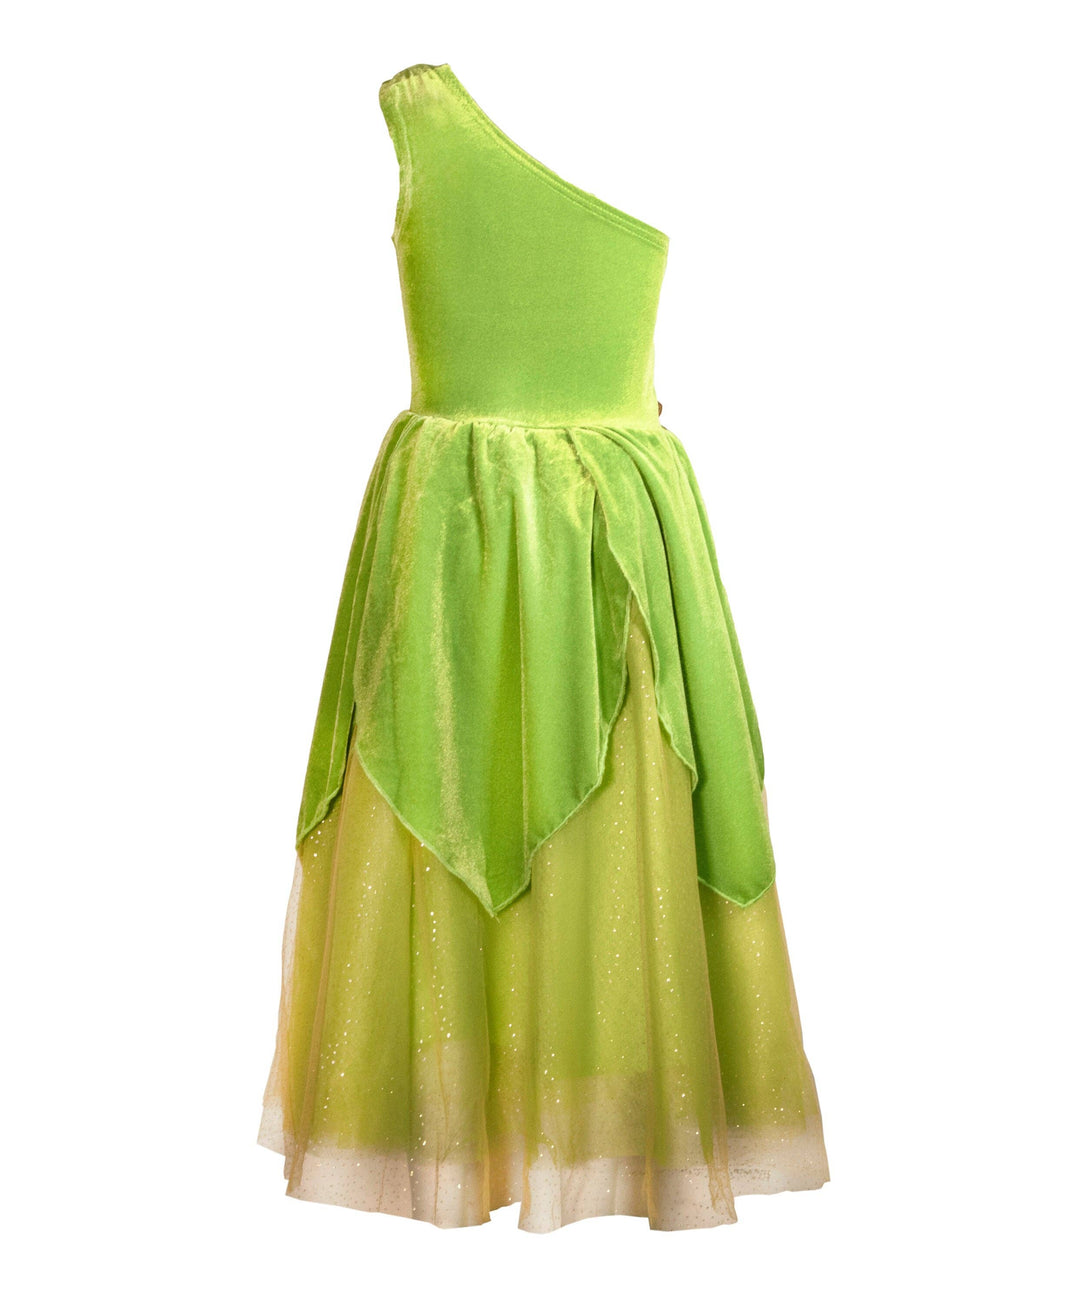 Tinker Fairy  dress